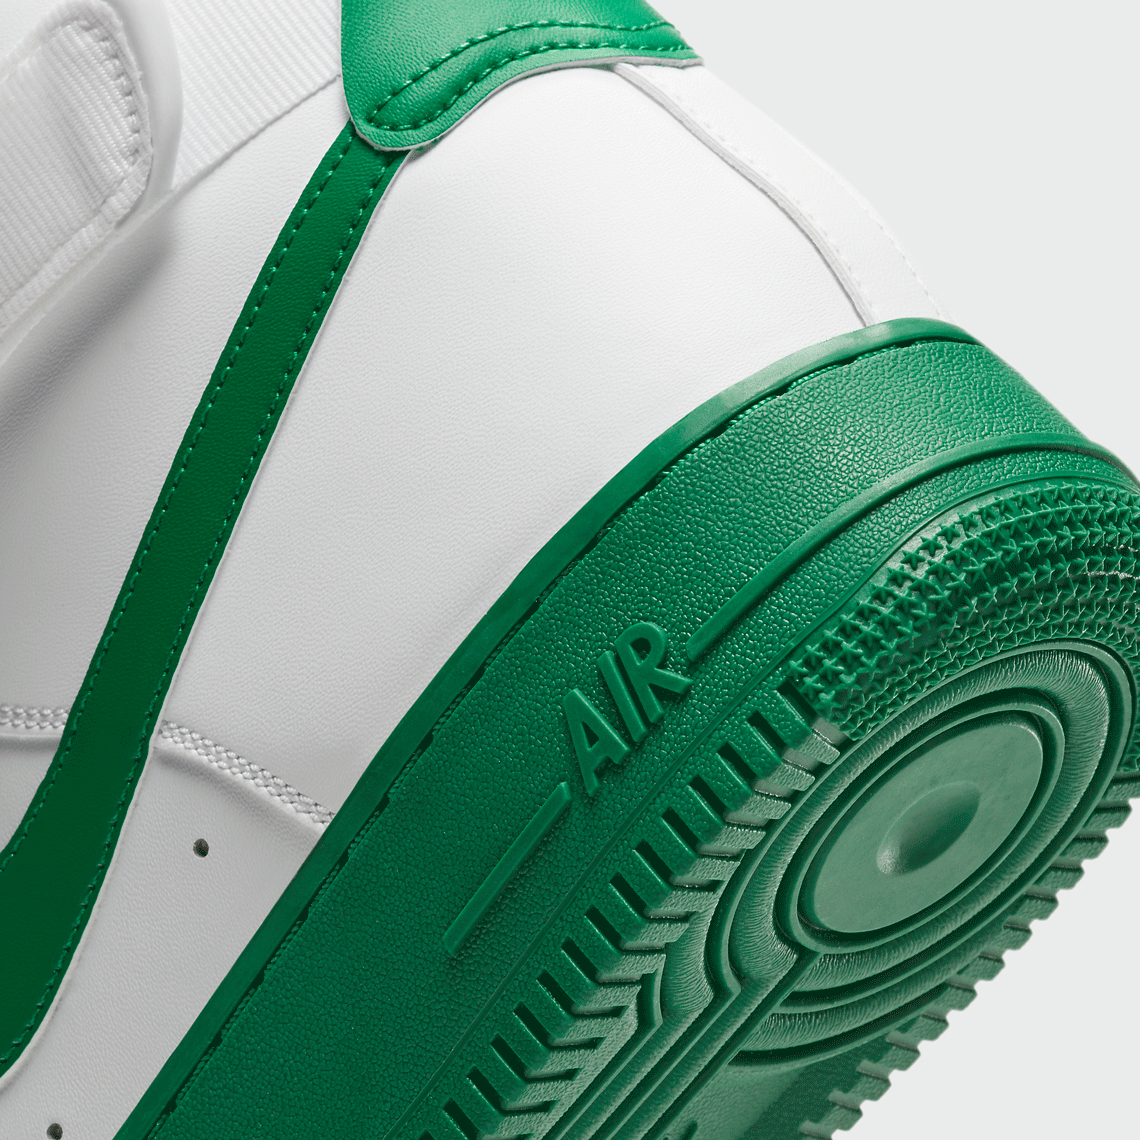 Nike Air Force 1 High White Green CK7794-100 | SneakerNews.com